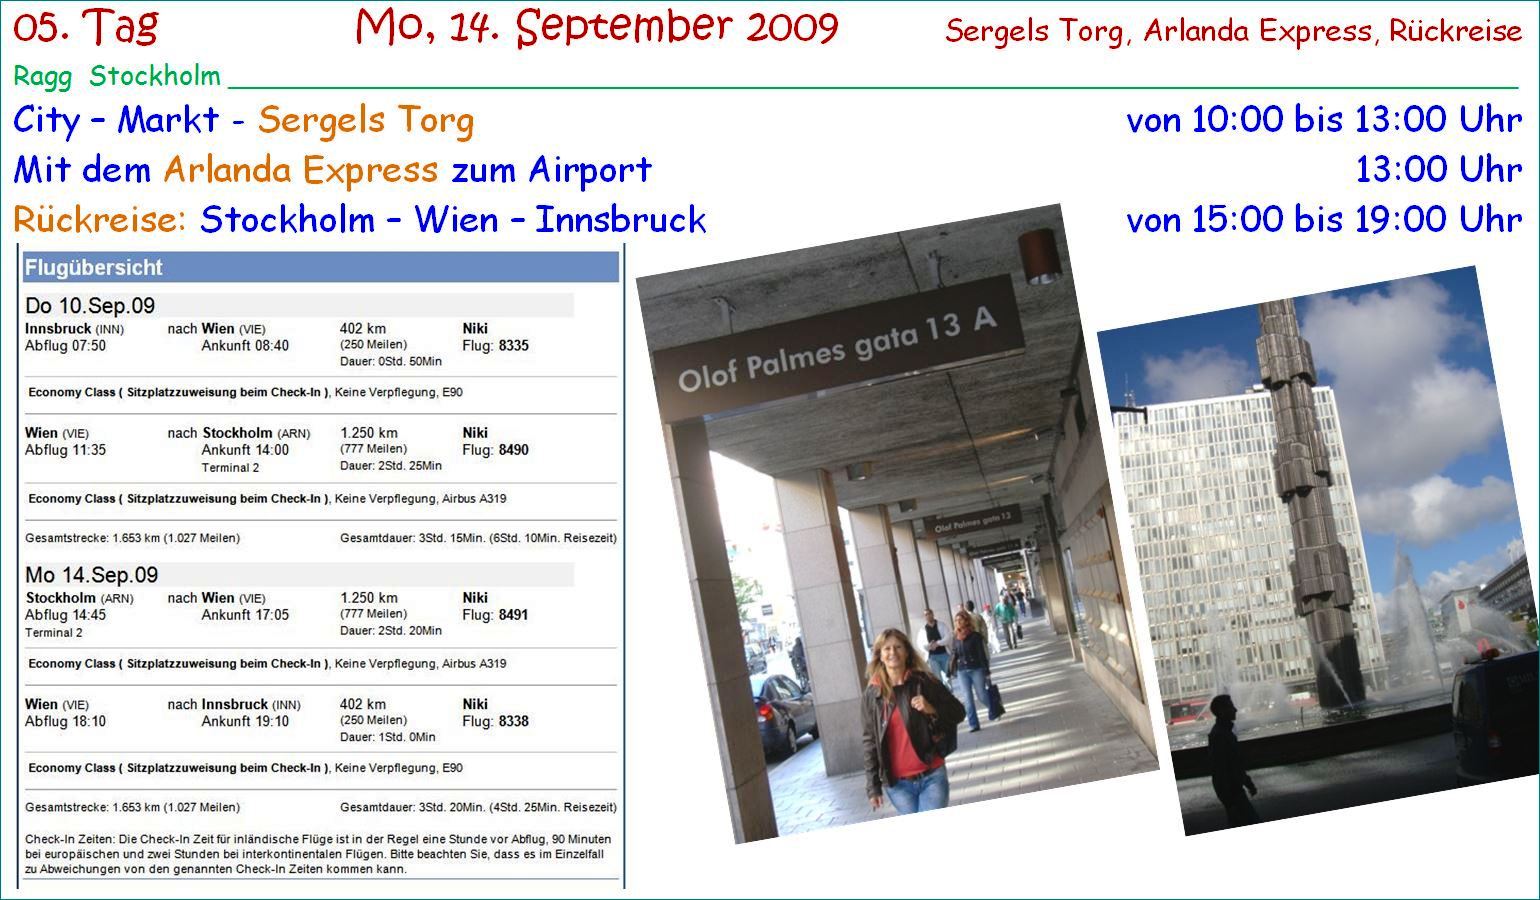 ragg 2009-09-14 - 1110AA - Stockholm - Sergels Torg-Rückreise Tag 05 - S07 B01